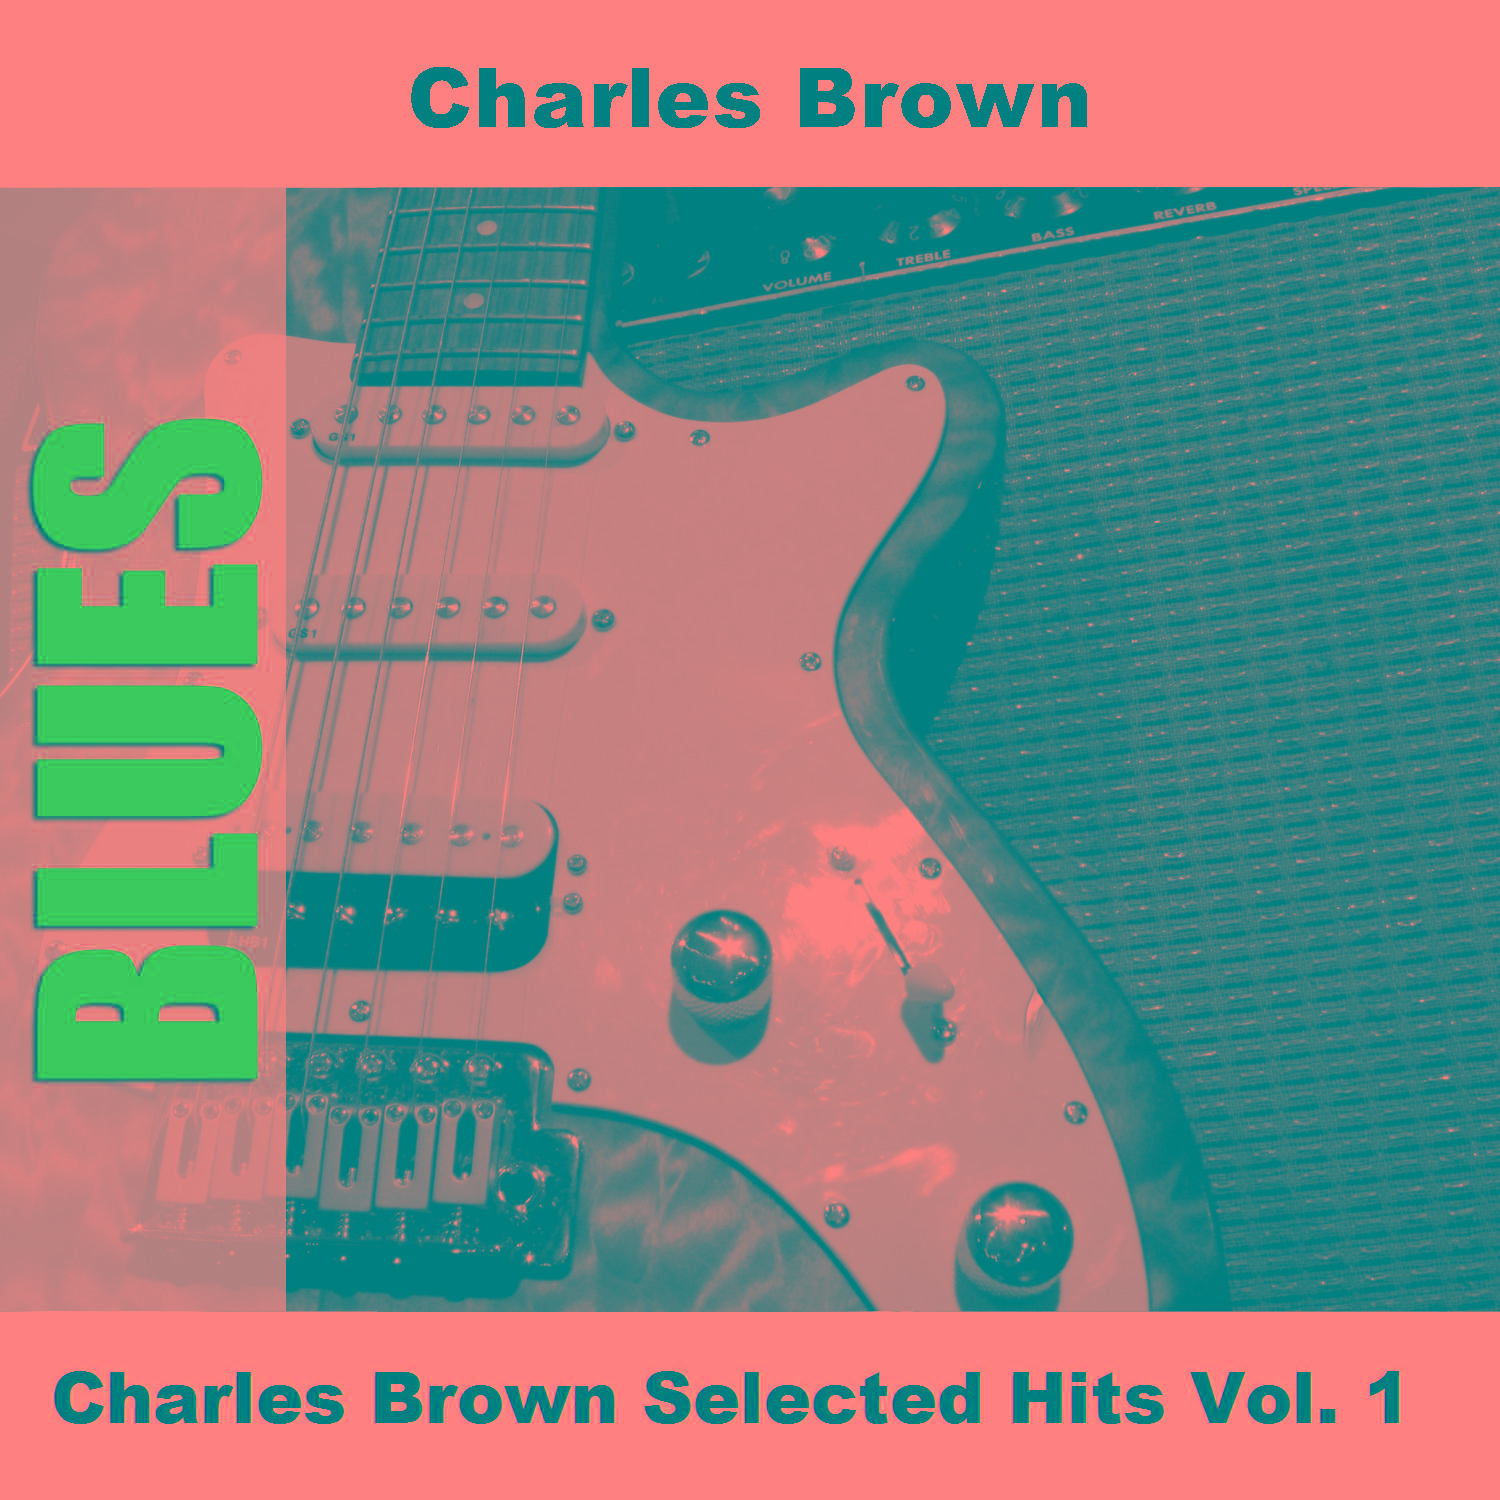 Charles Brown Selected Hits Vol. 1